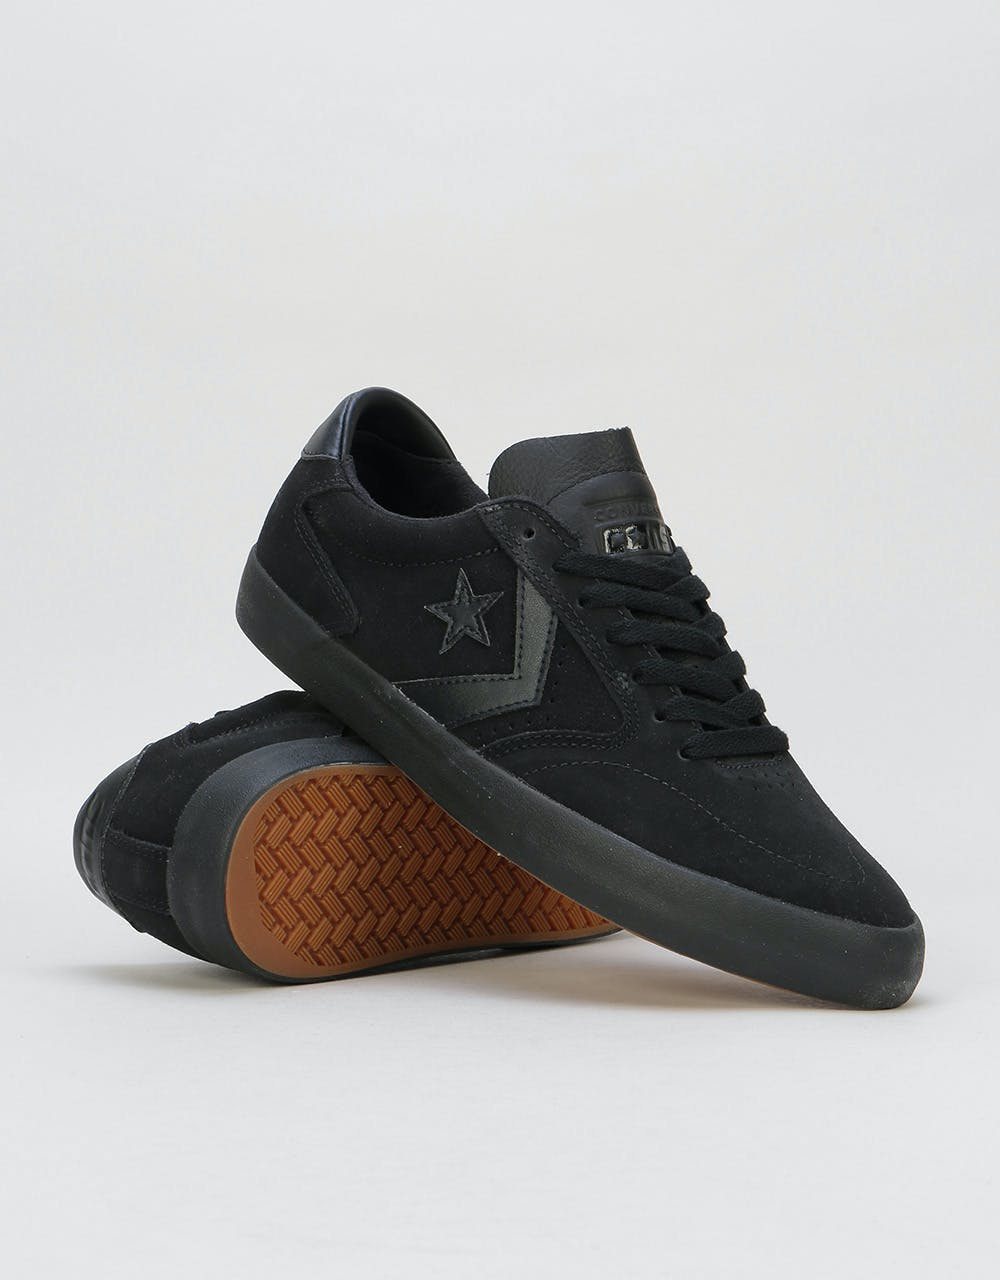 Converse Checkpoint Pro Skate Shoes - Black/Black/Black